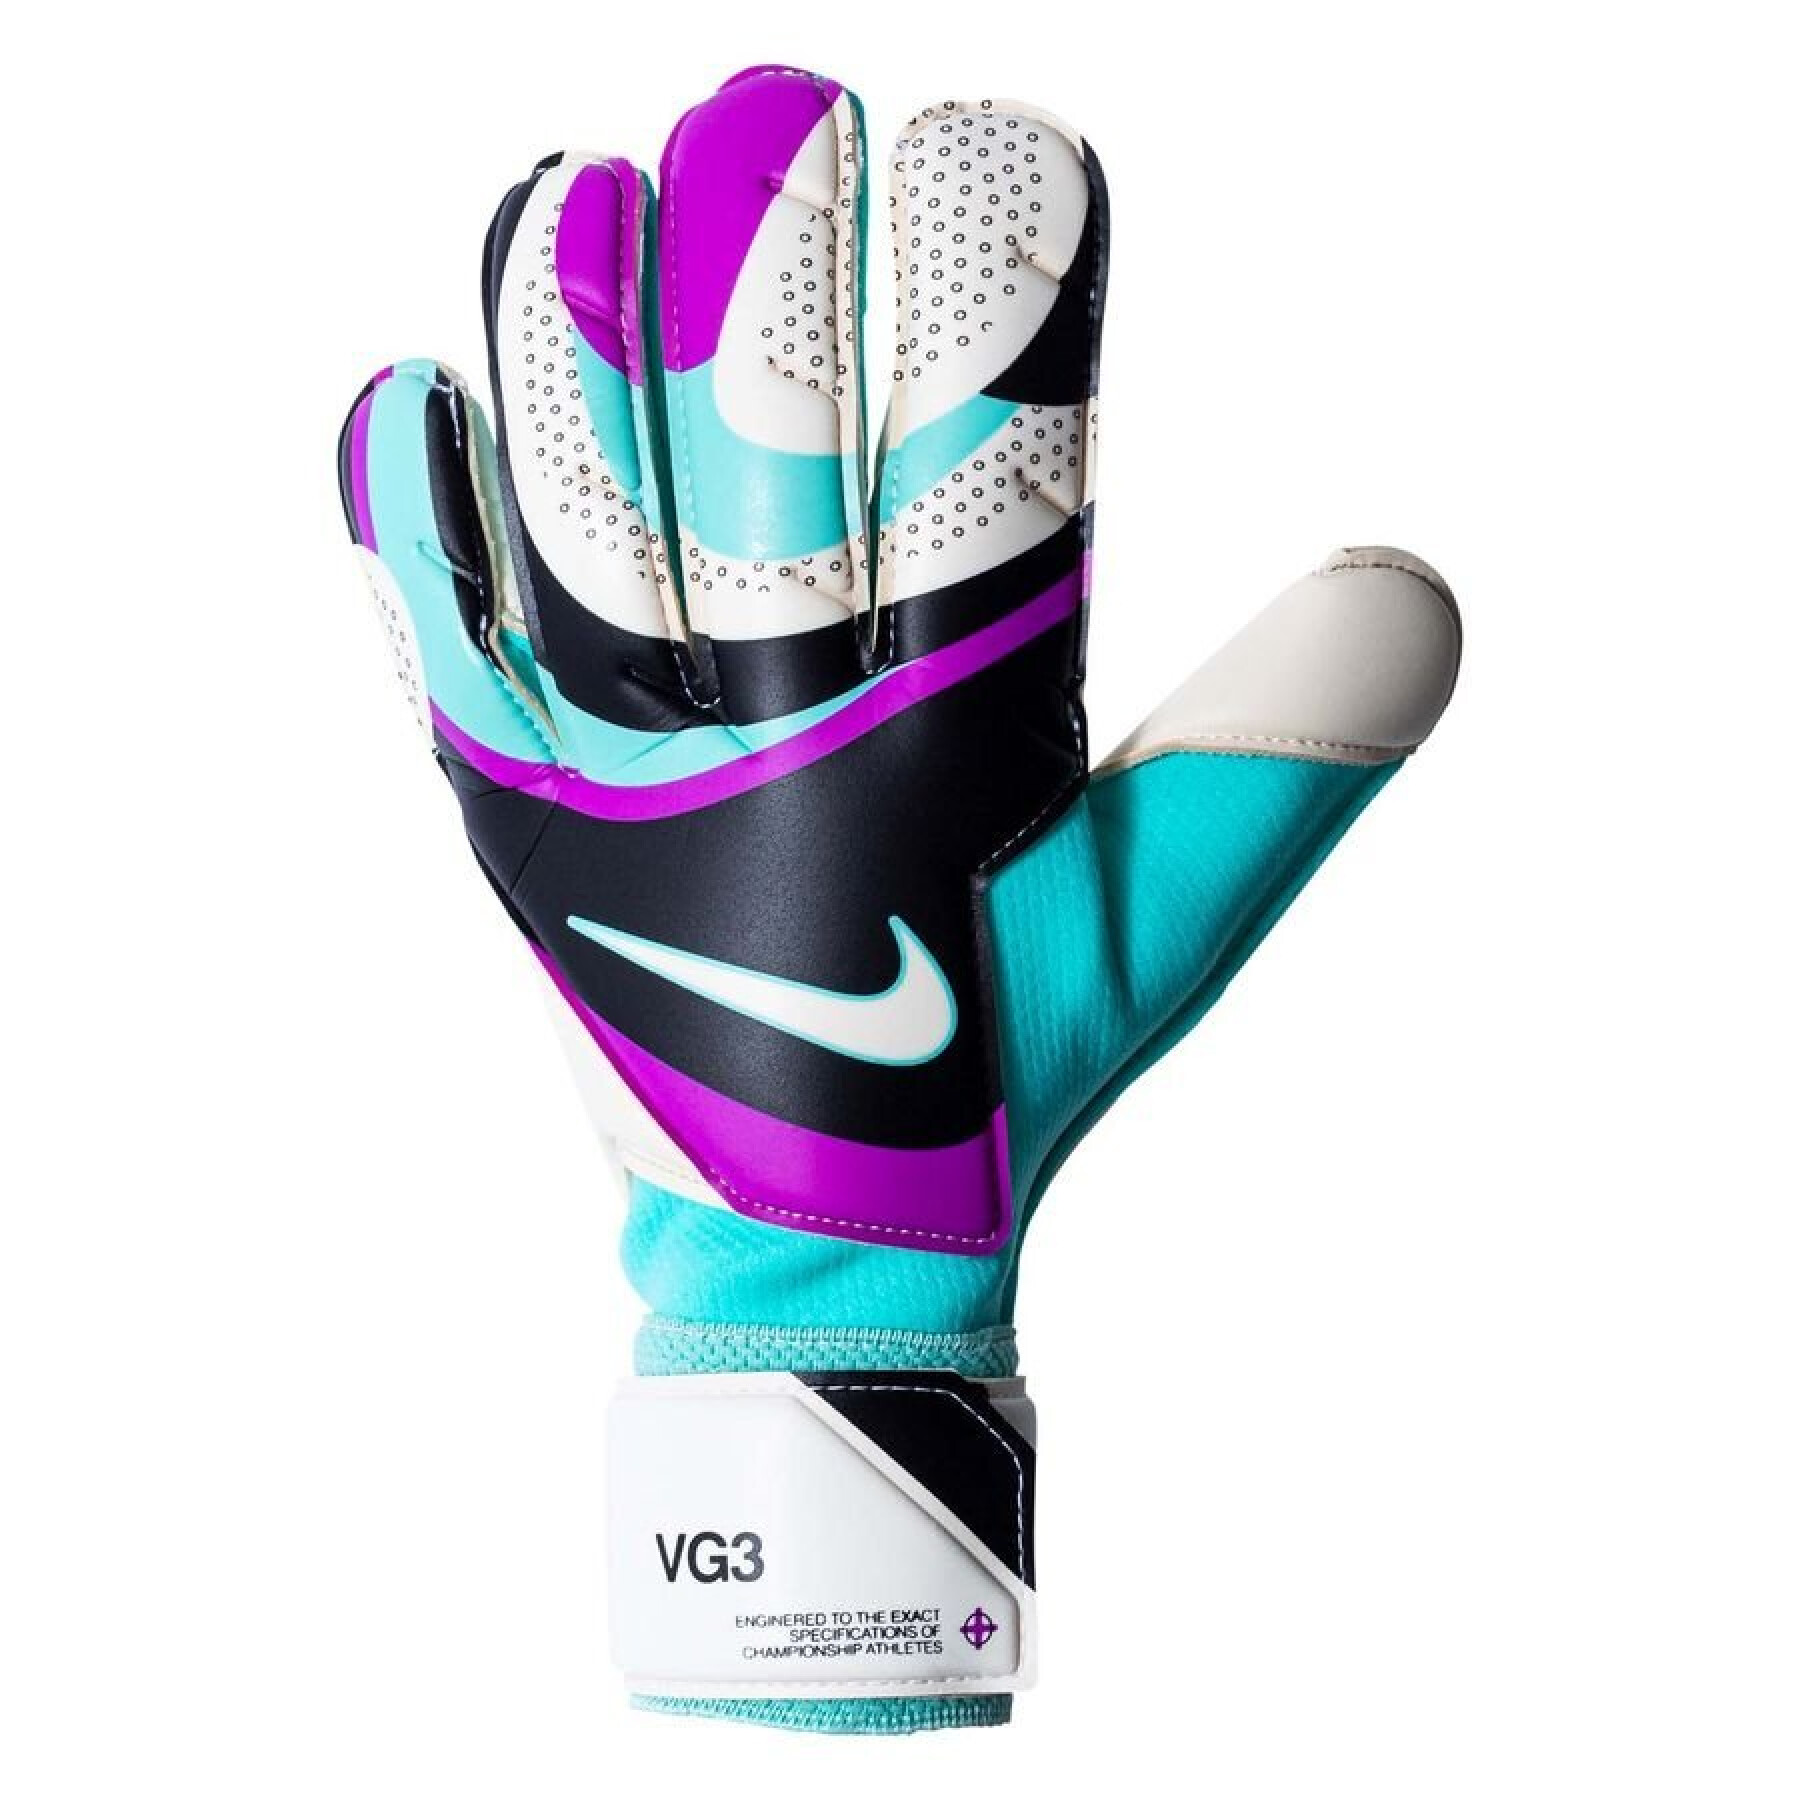 Keepershandschoenen Nike Vapor Grip3